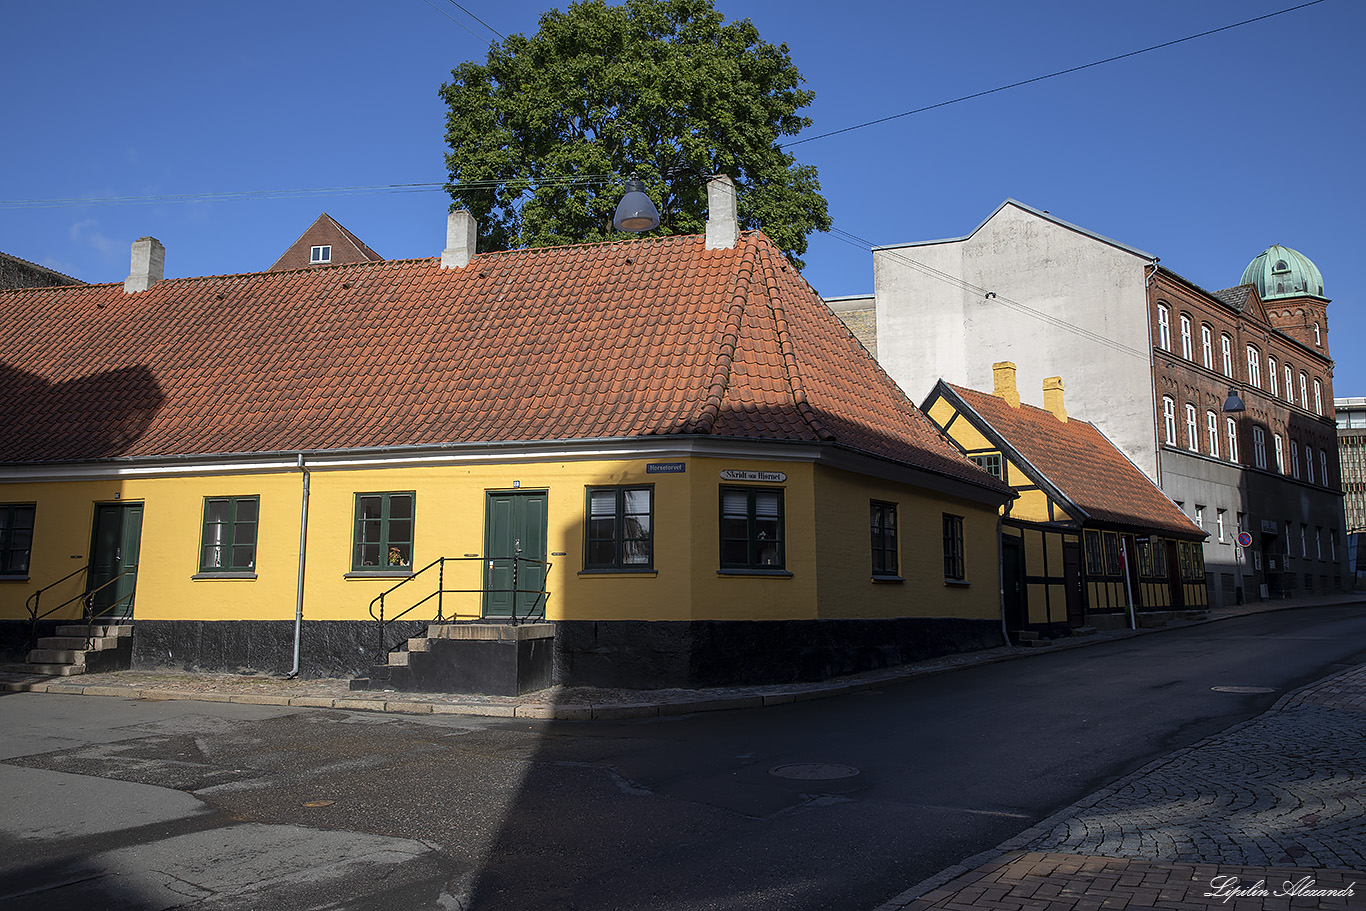 Оденсе (Odense) - Дания (Danmark)